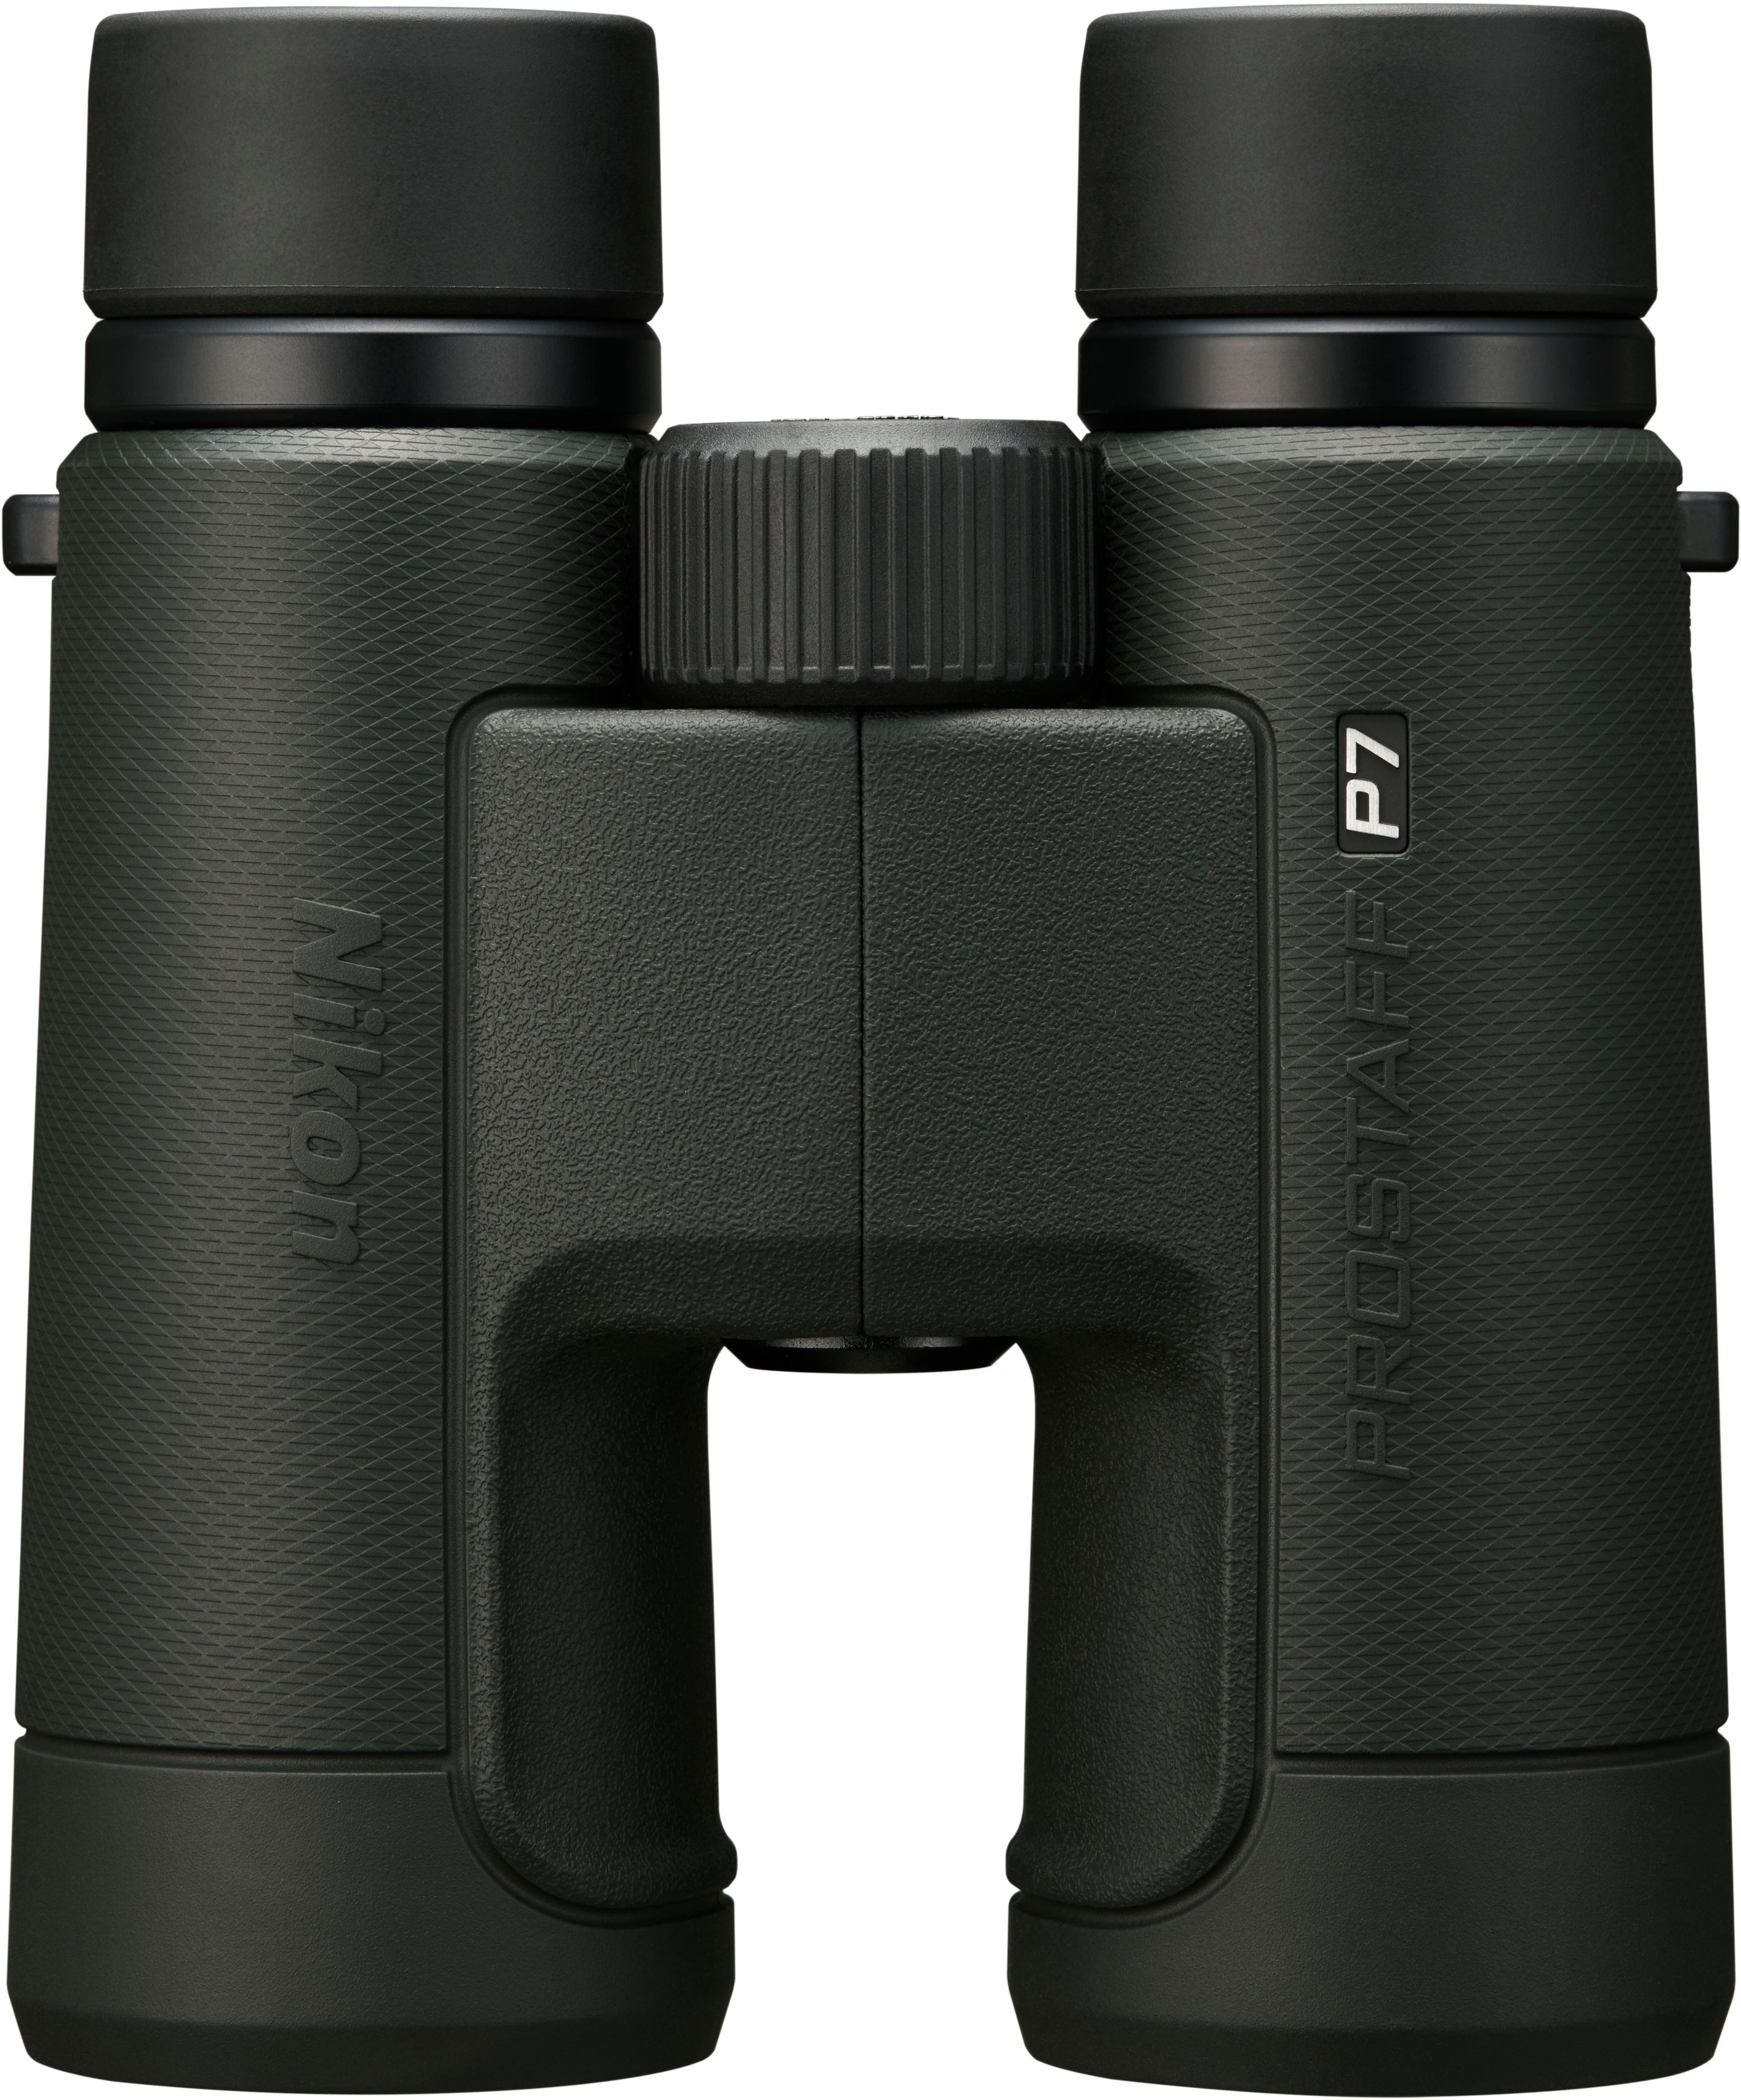 Angle View: Nikon - PROSTAFF P7 10X42 Waterproof Binoculars - Green